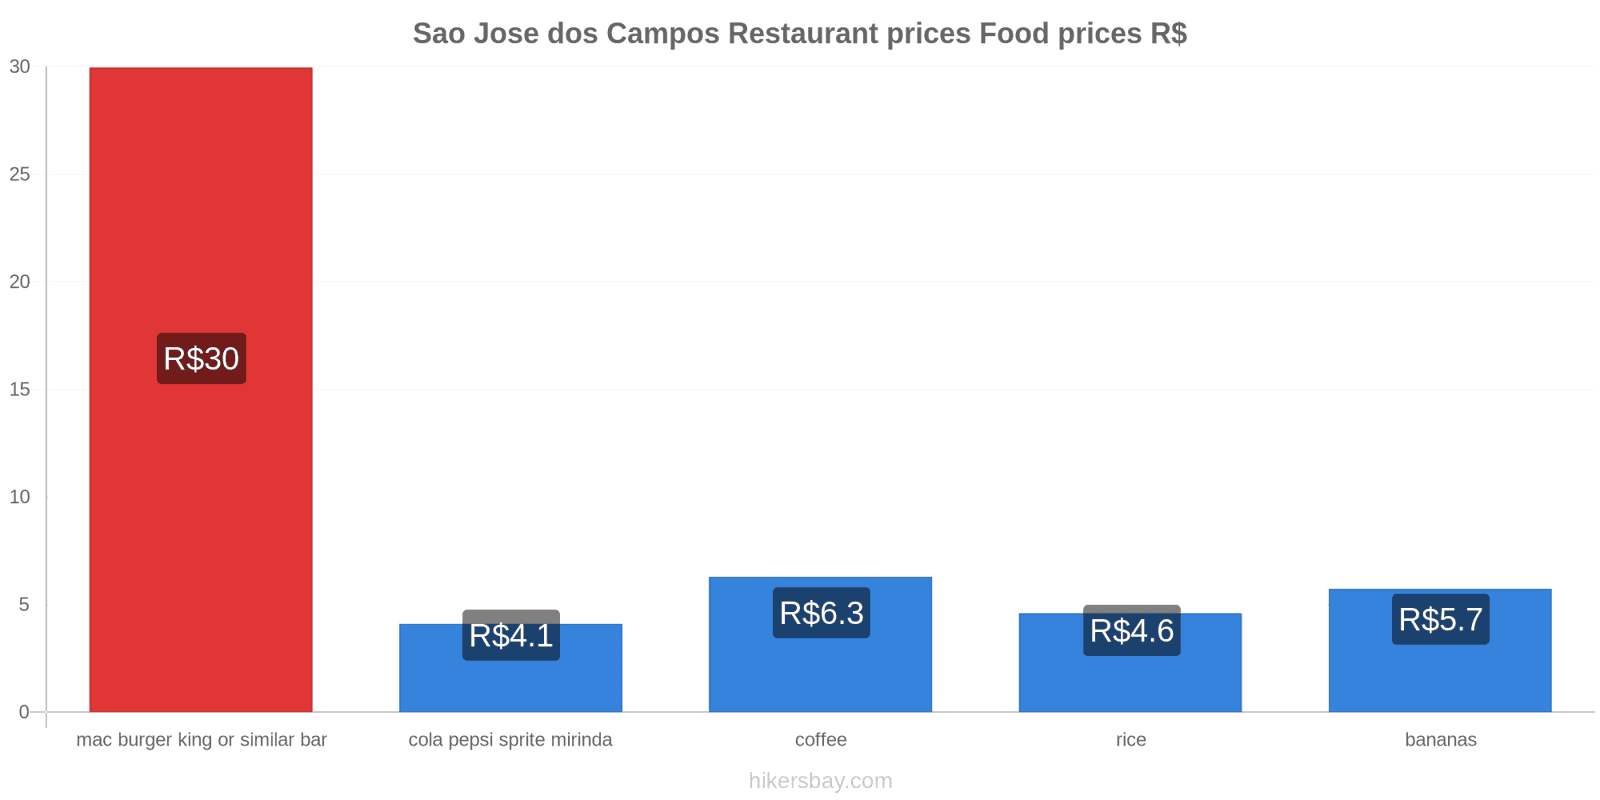 Sao Jose dos Campos price changes hikersbay.com